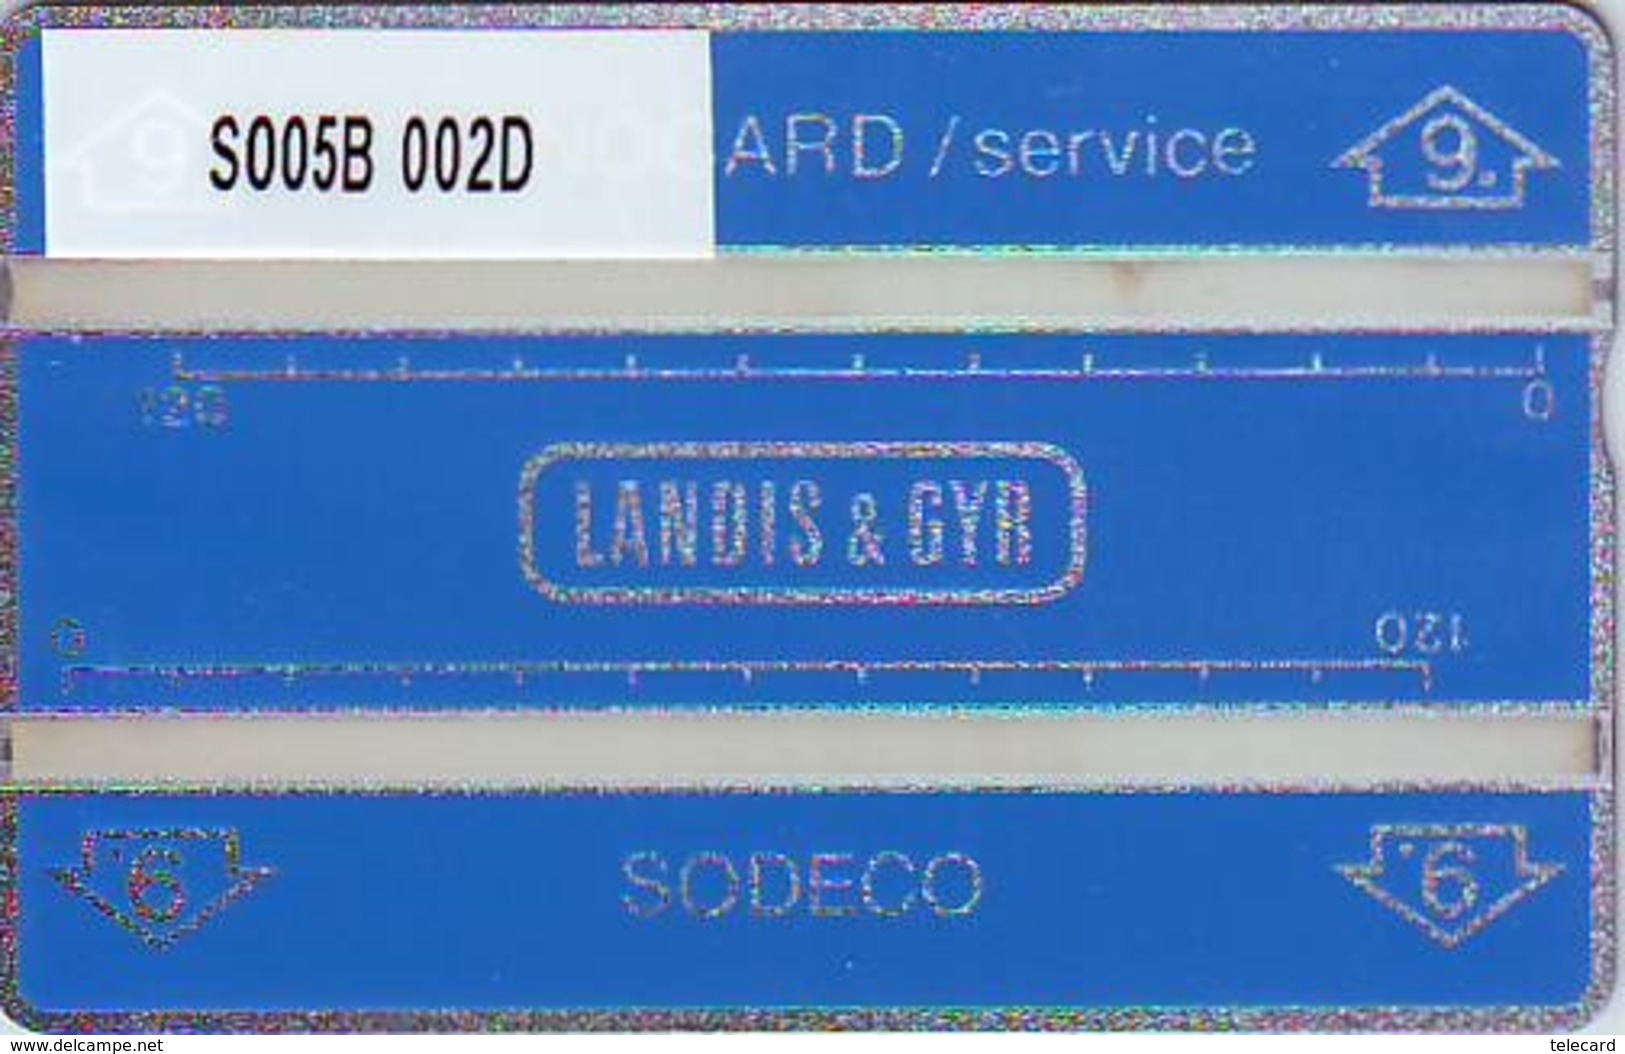 NEDERLAND LANDIS&GYR * SODECO * SERVICE CARD NR S005B 002D  "9"  3 Mm ONGEBRUIKT *  MINT - Test & Dienst